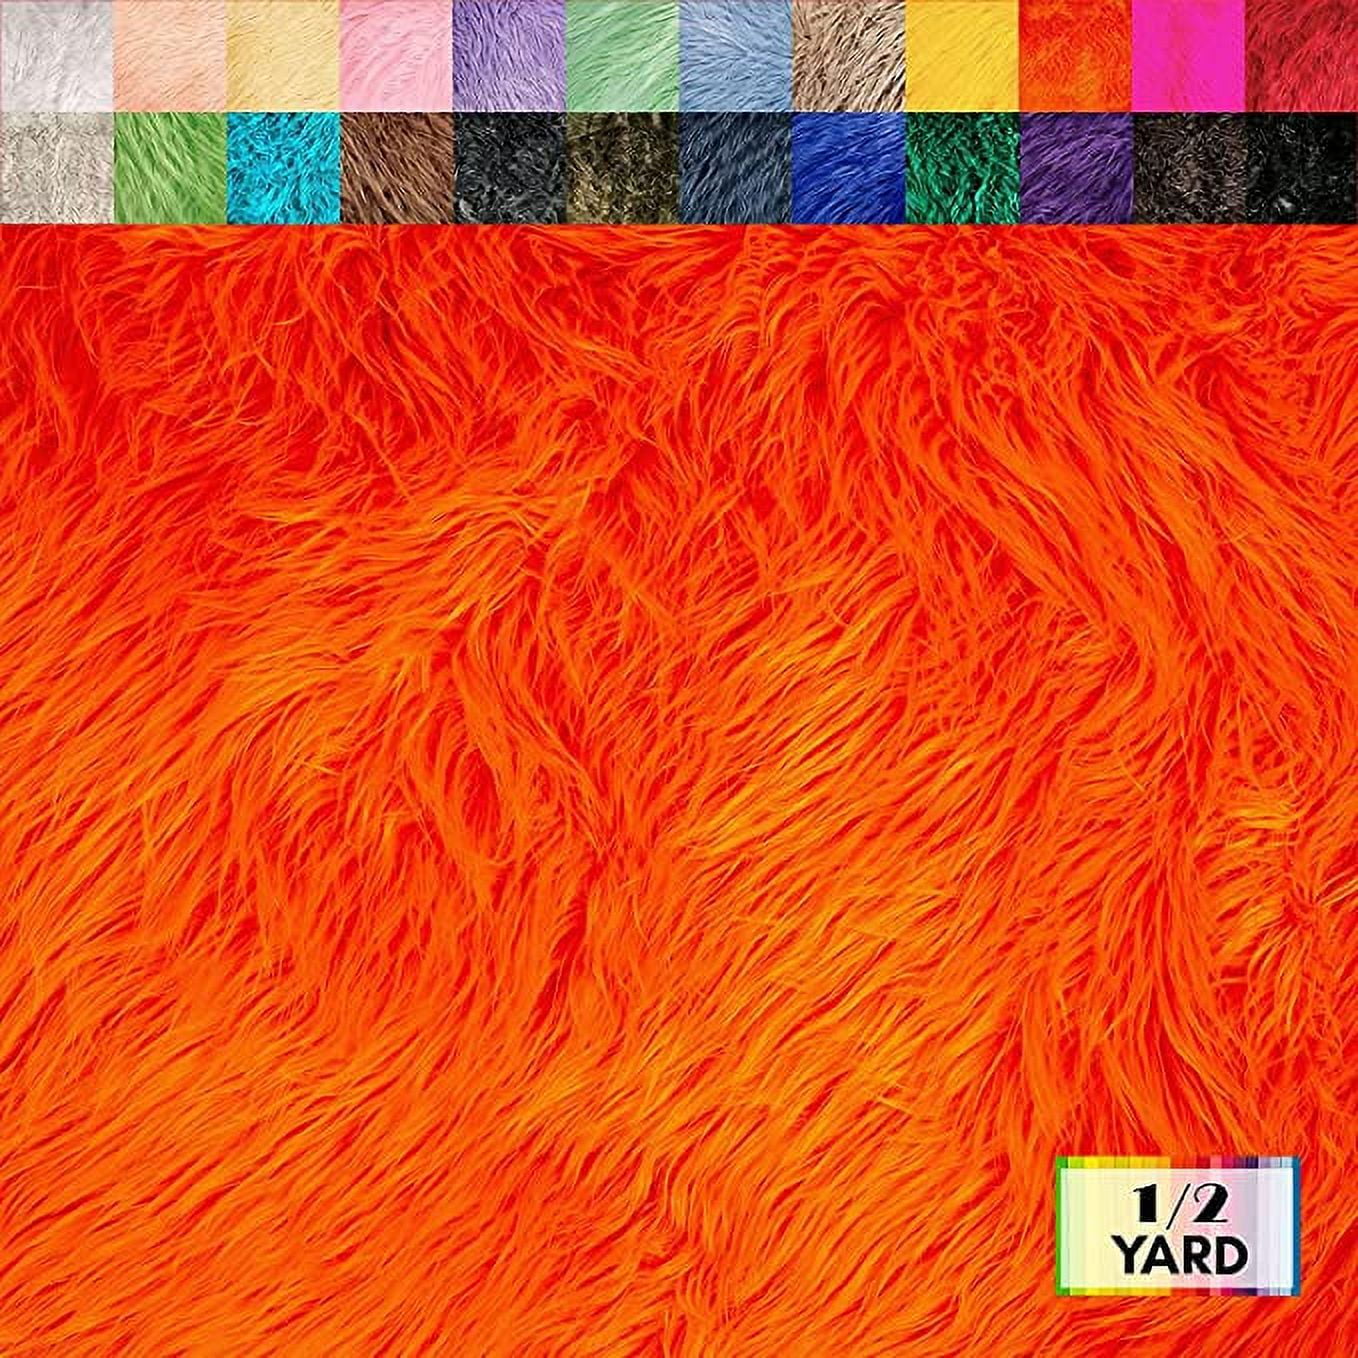 FabricLA Shaggy Faux Fur Fabric by The Yard - 18 x 60 Inches (45 cm x 150